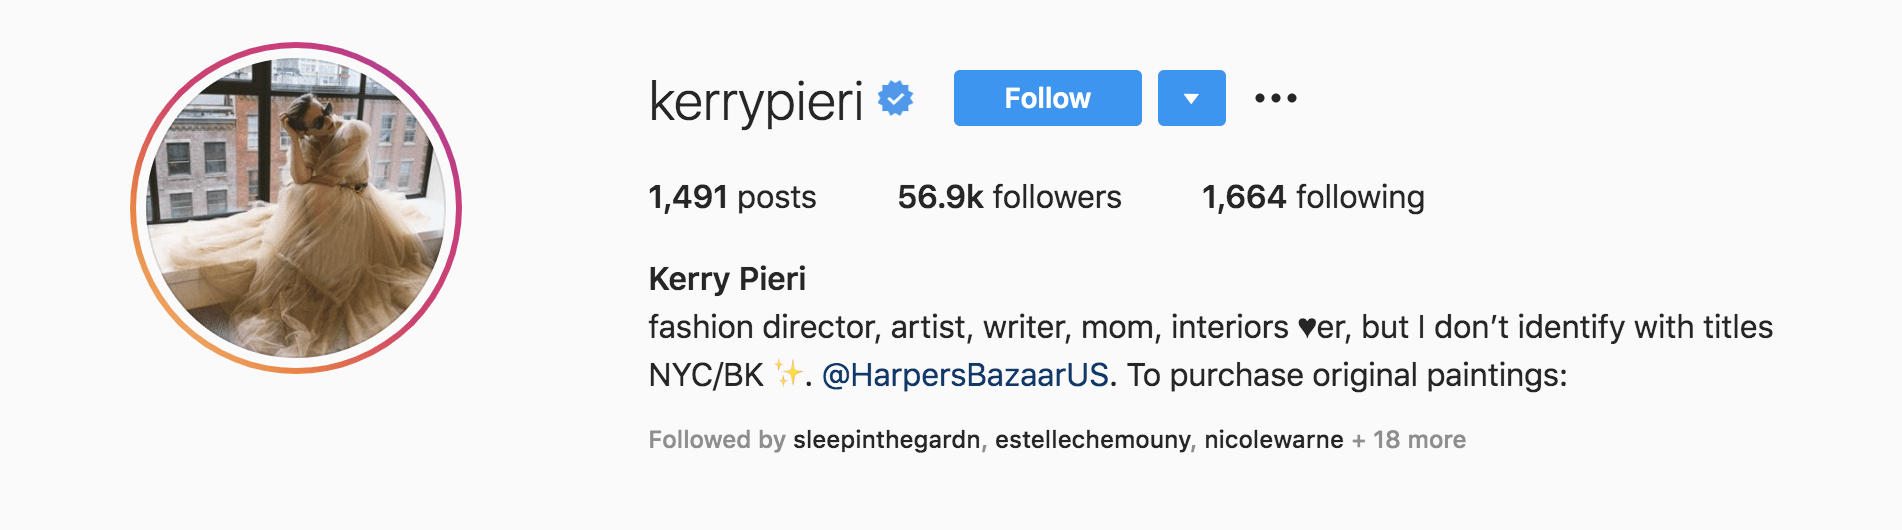 Top Fashion Influencers - Kerry Pieri